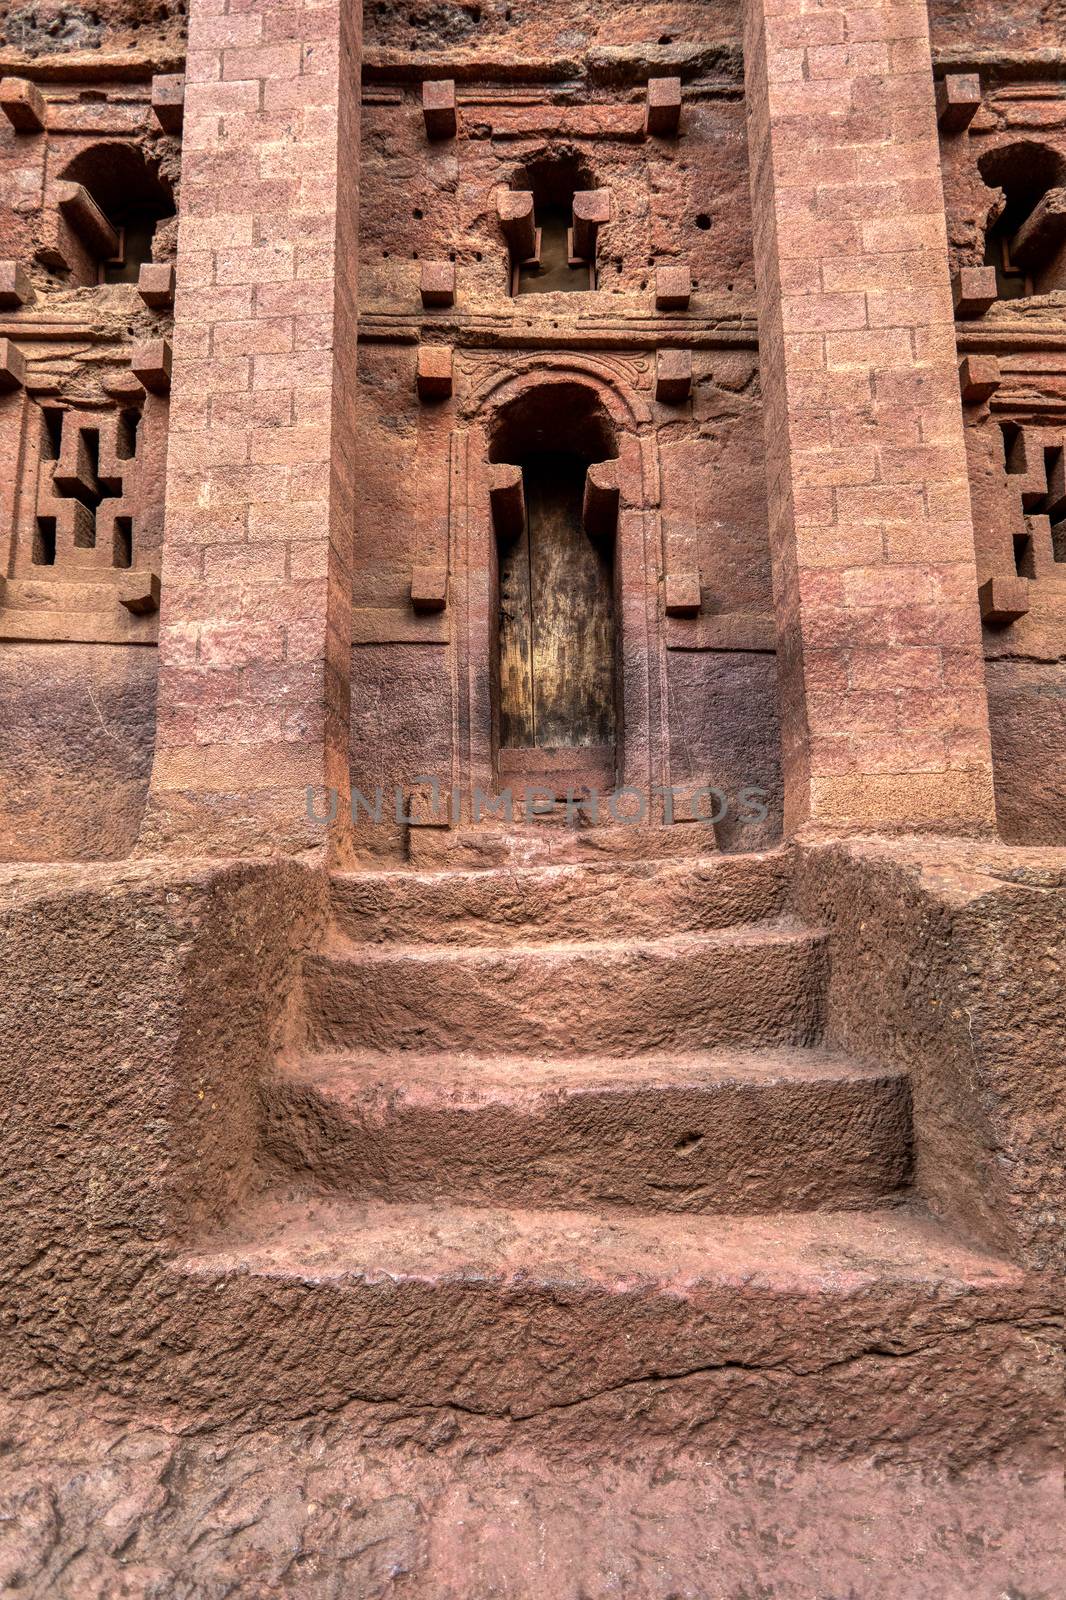 Biete Medhane Alem is Orthodox underground monolith church carved into rock. UNESCO World Heritage Site, Lalibela Ethiopia, Africa